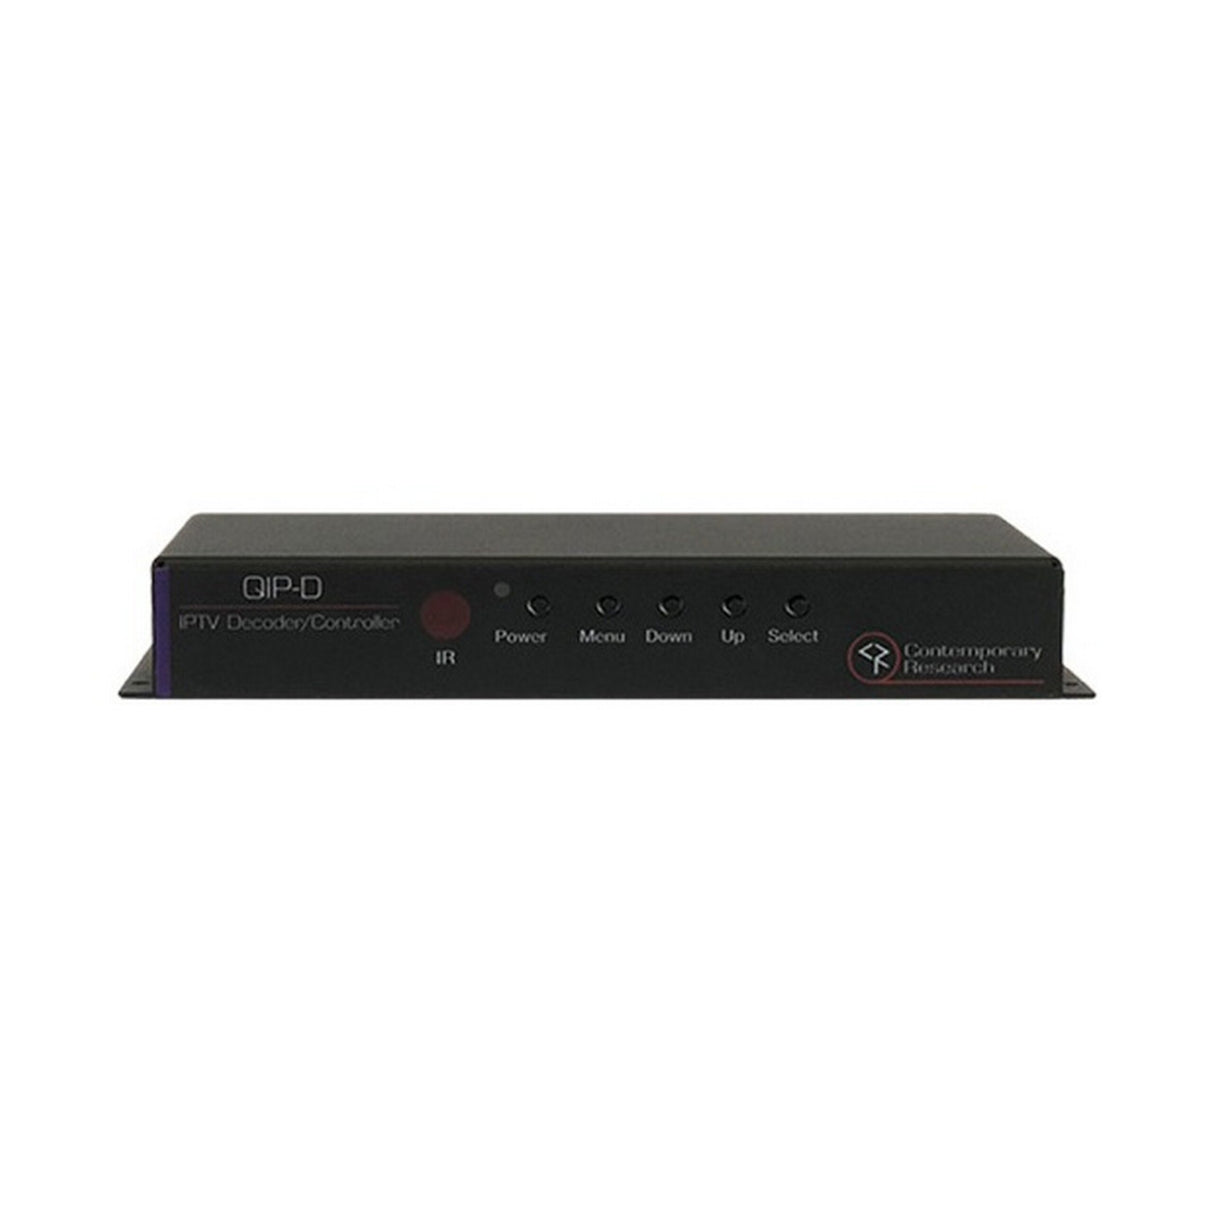 Contemporary Research QIP-DVX IPTV Decoder/Controller